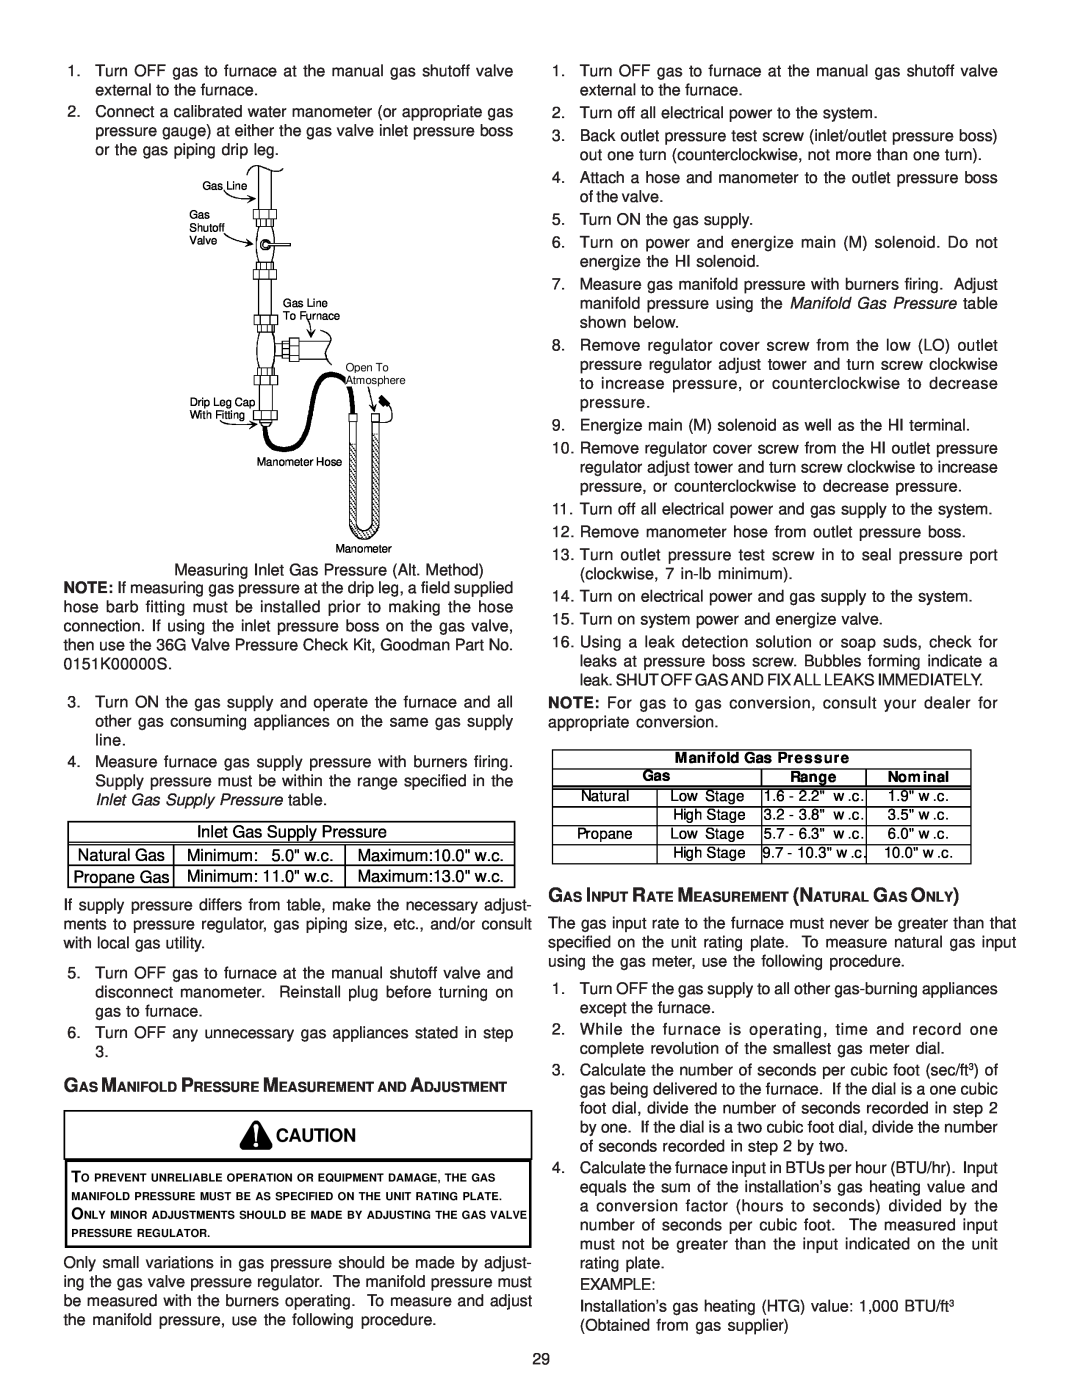 Amana ACV9, AMV9 installation instructions Measuring Inlet Gas Pressure Alt. Method 